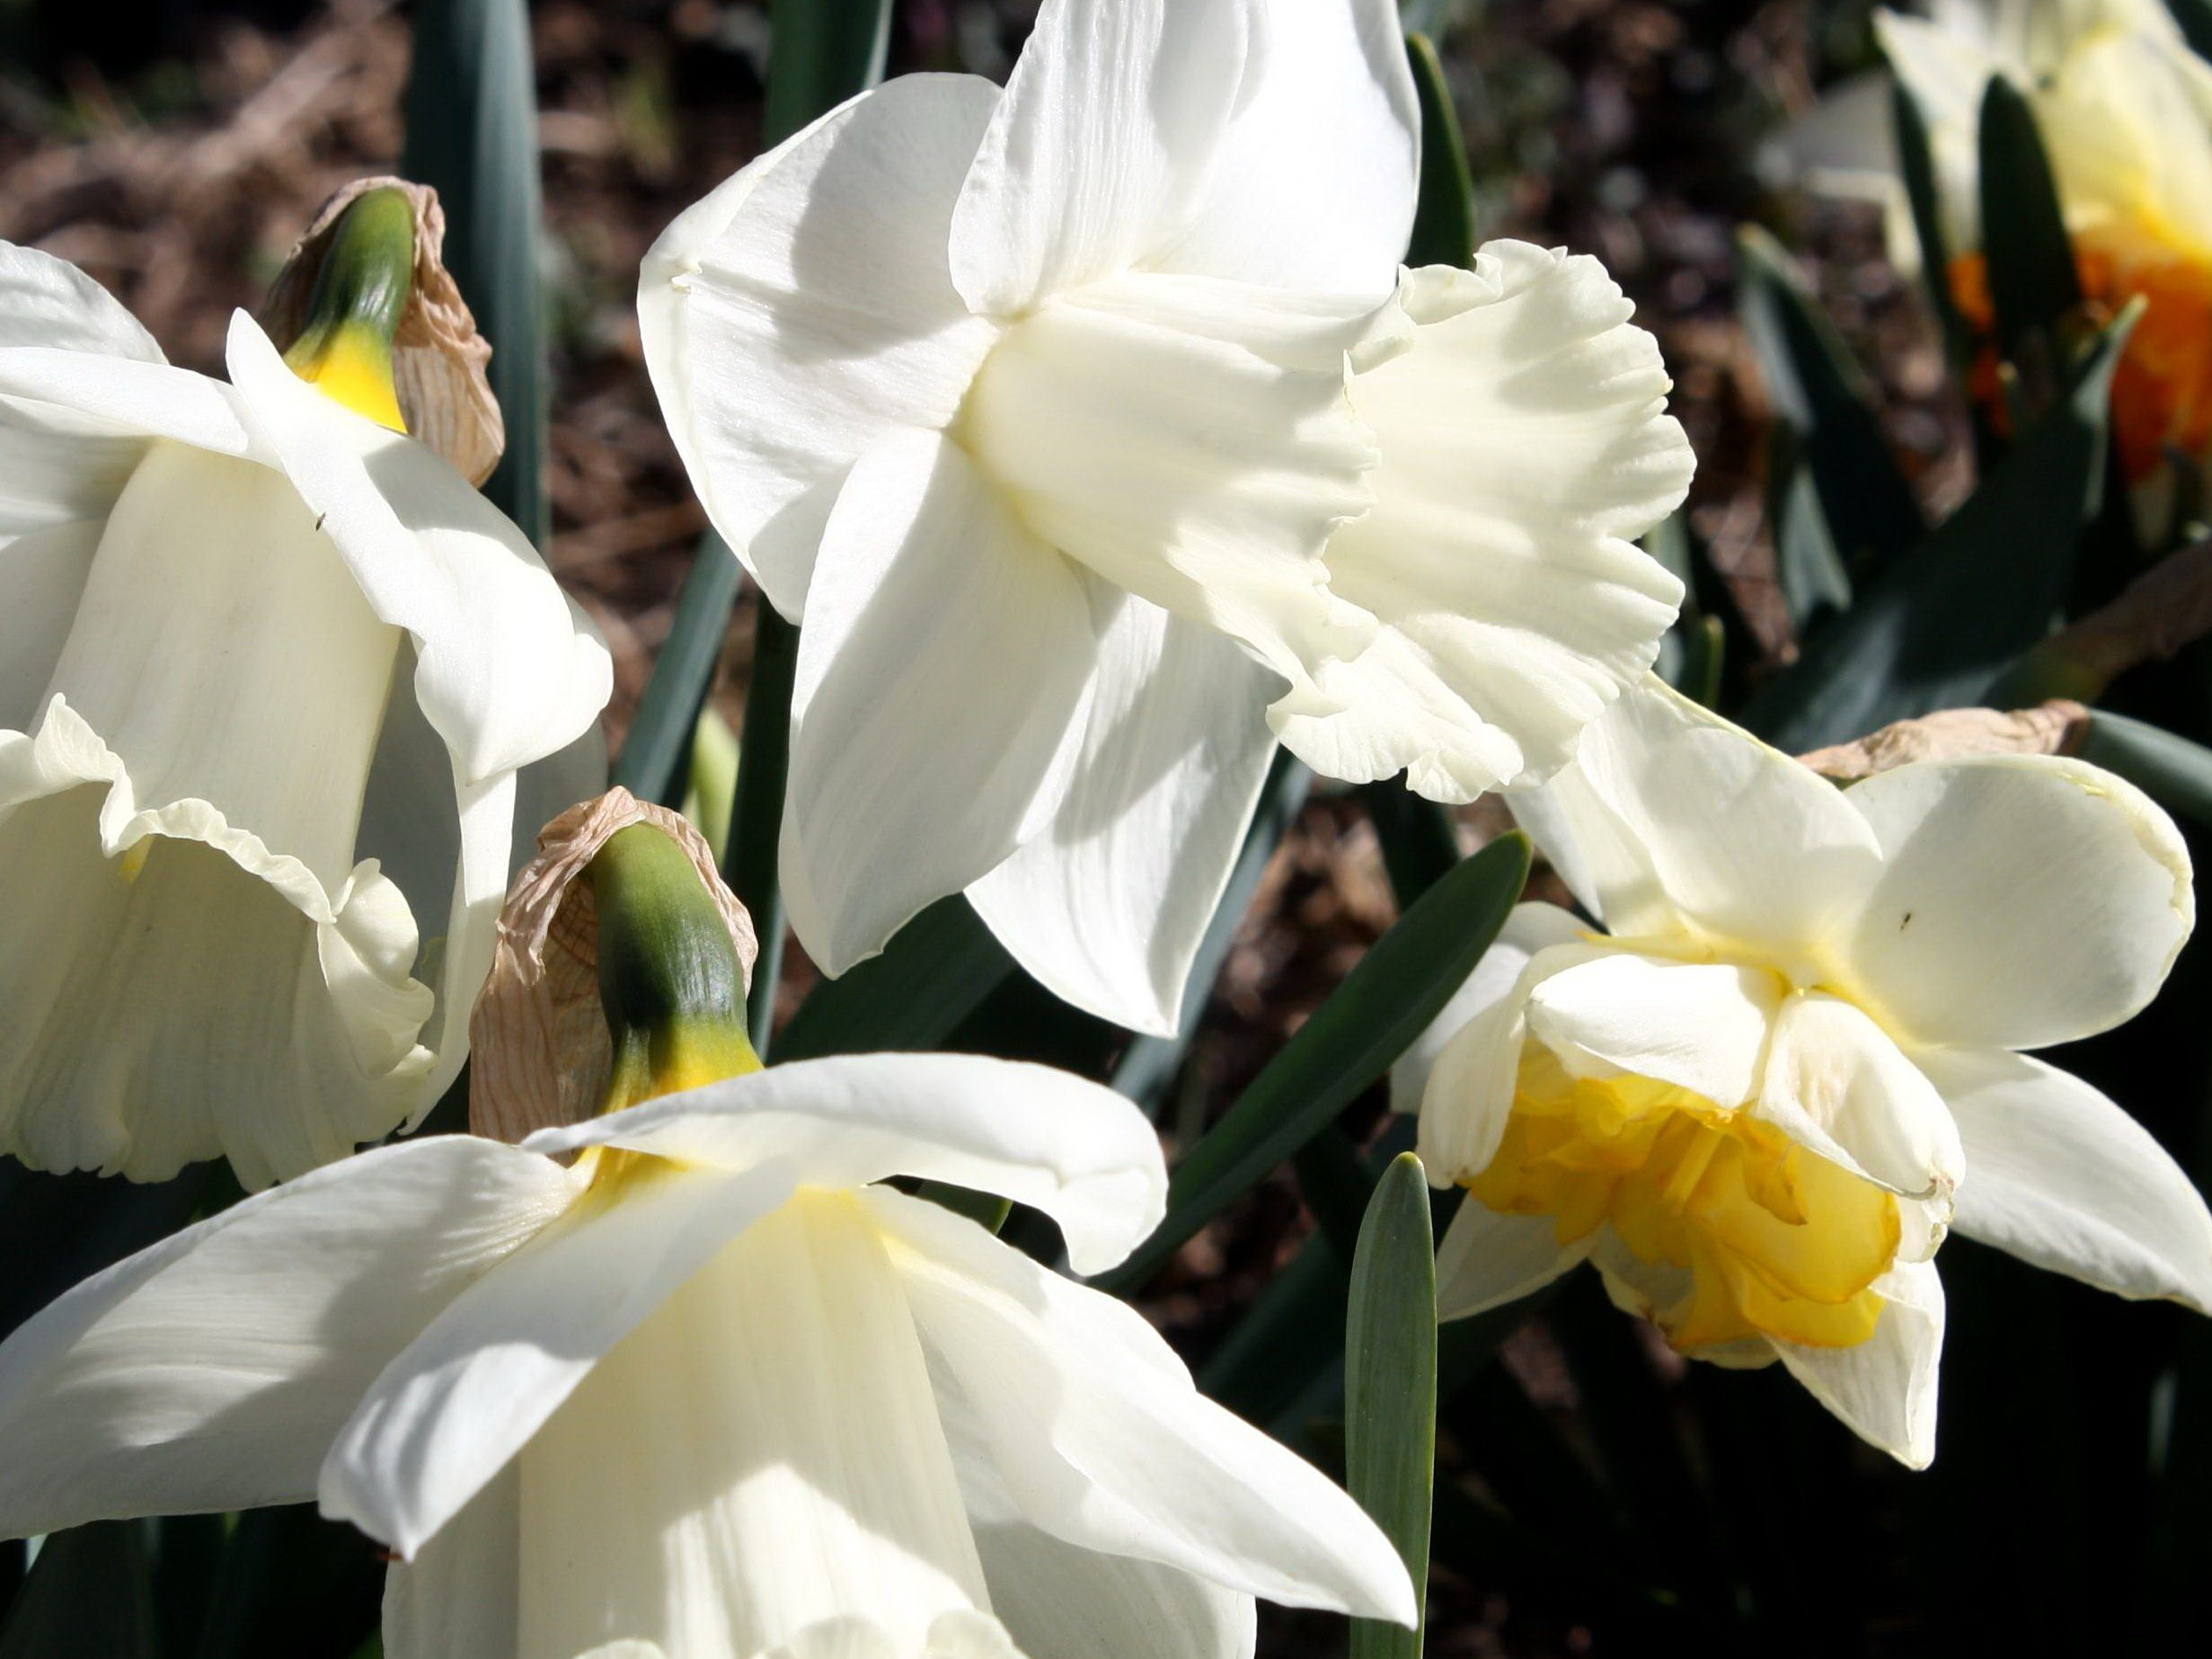 Free picture: daffodil flowers, white daffodils, pistil, vegetation ...